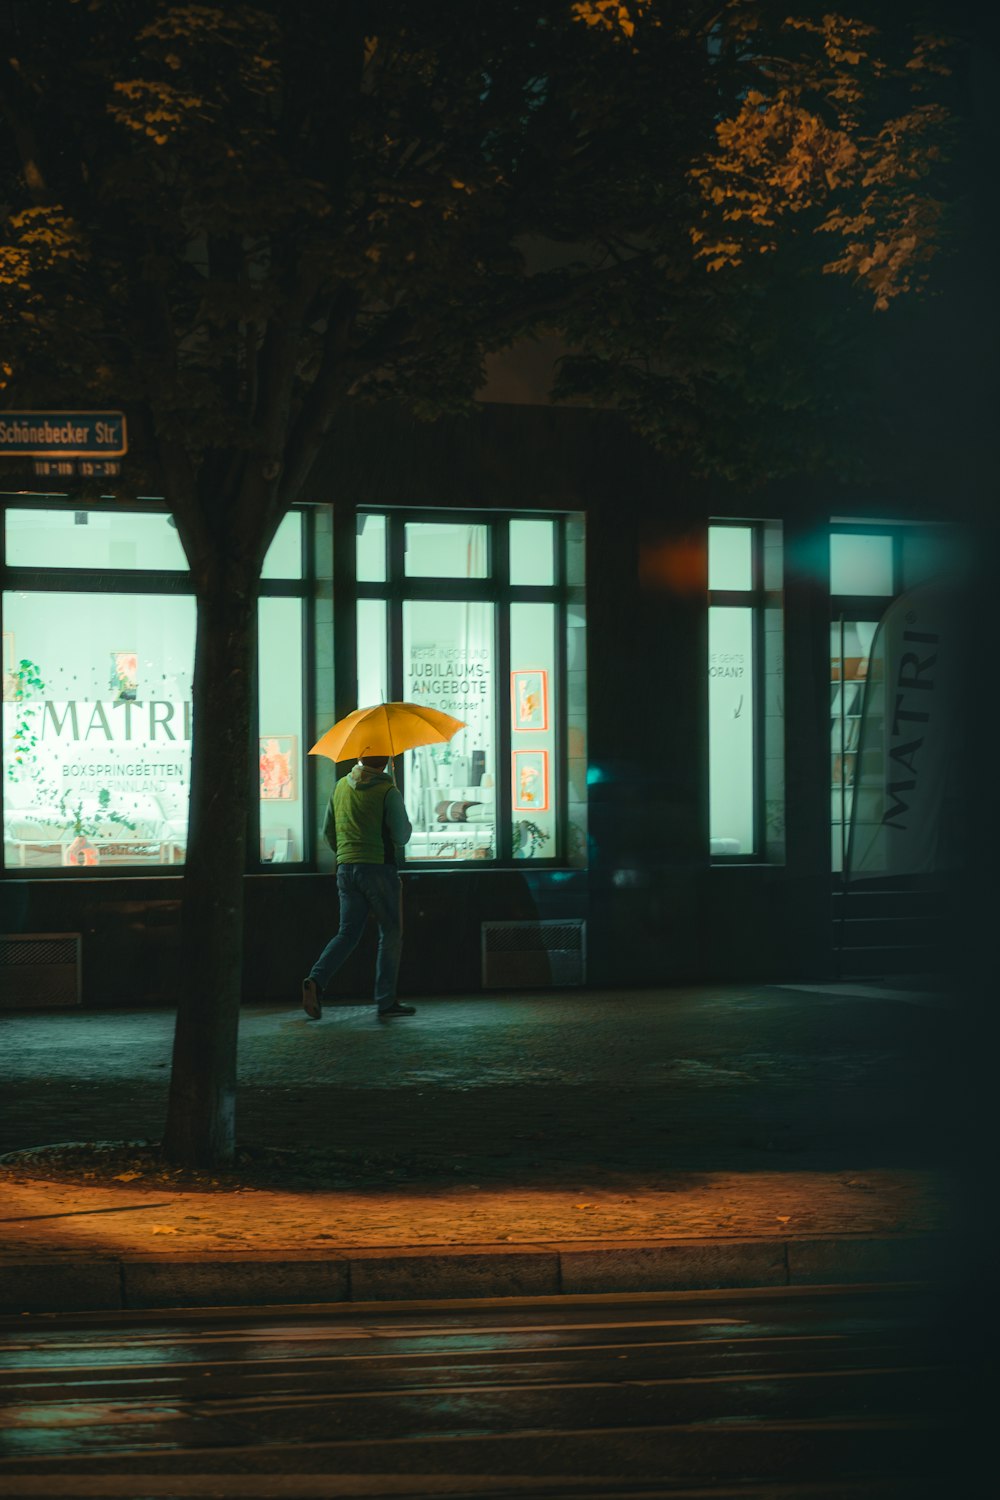 a man walking down a street holding a yellow umbrella